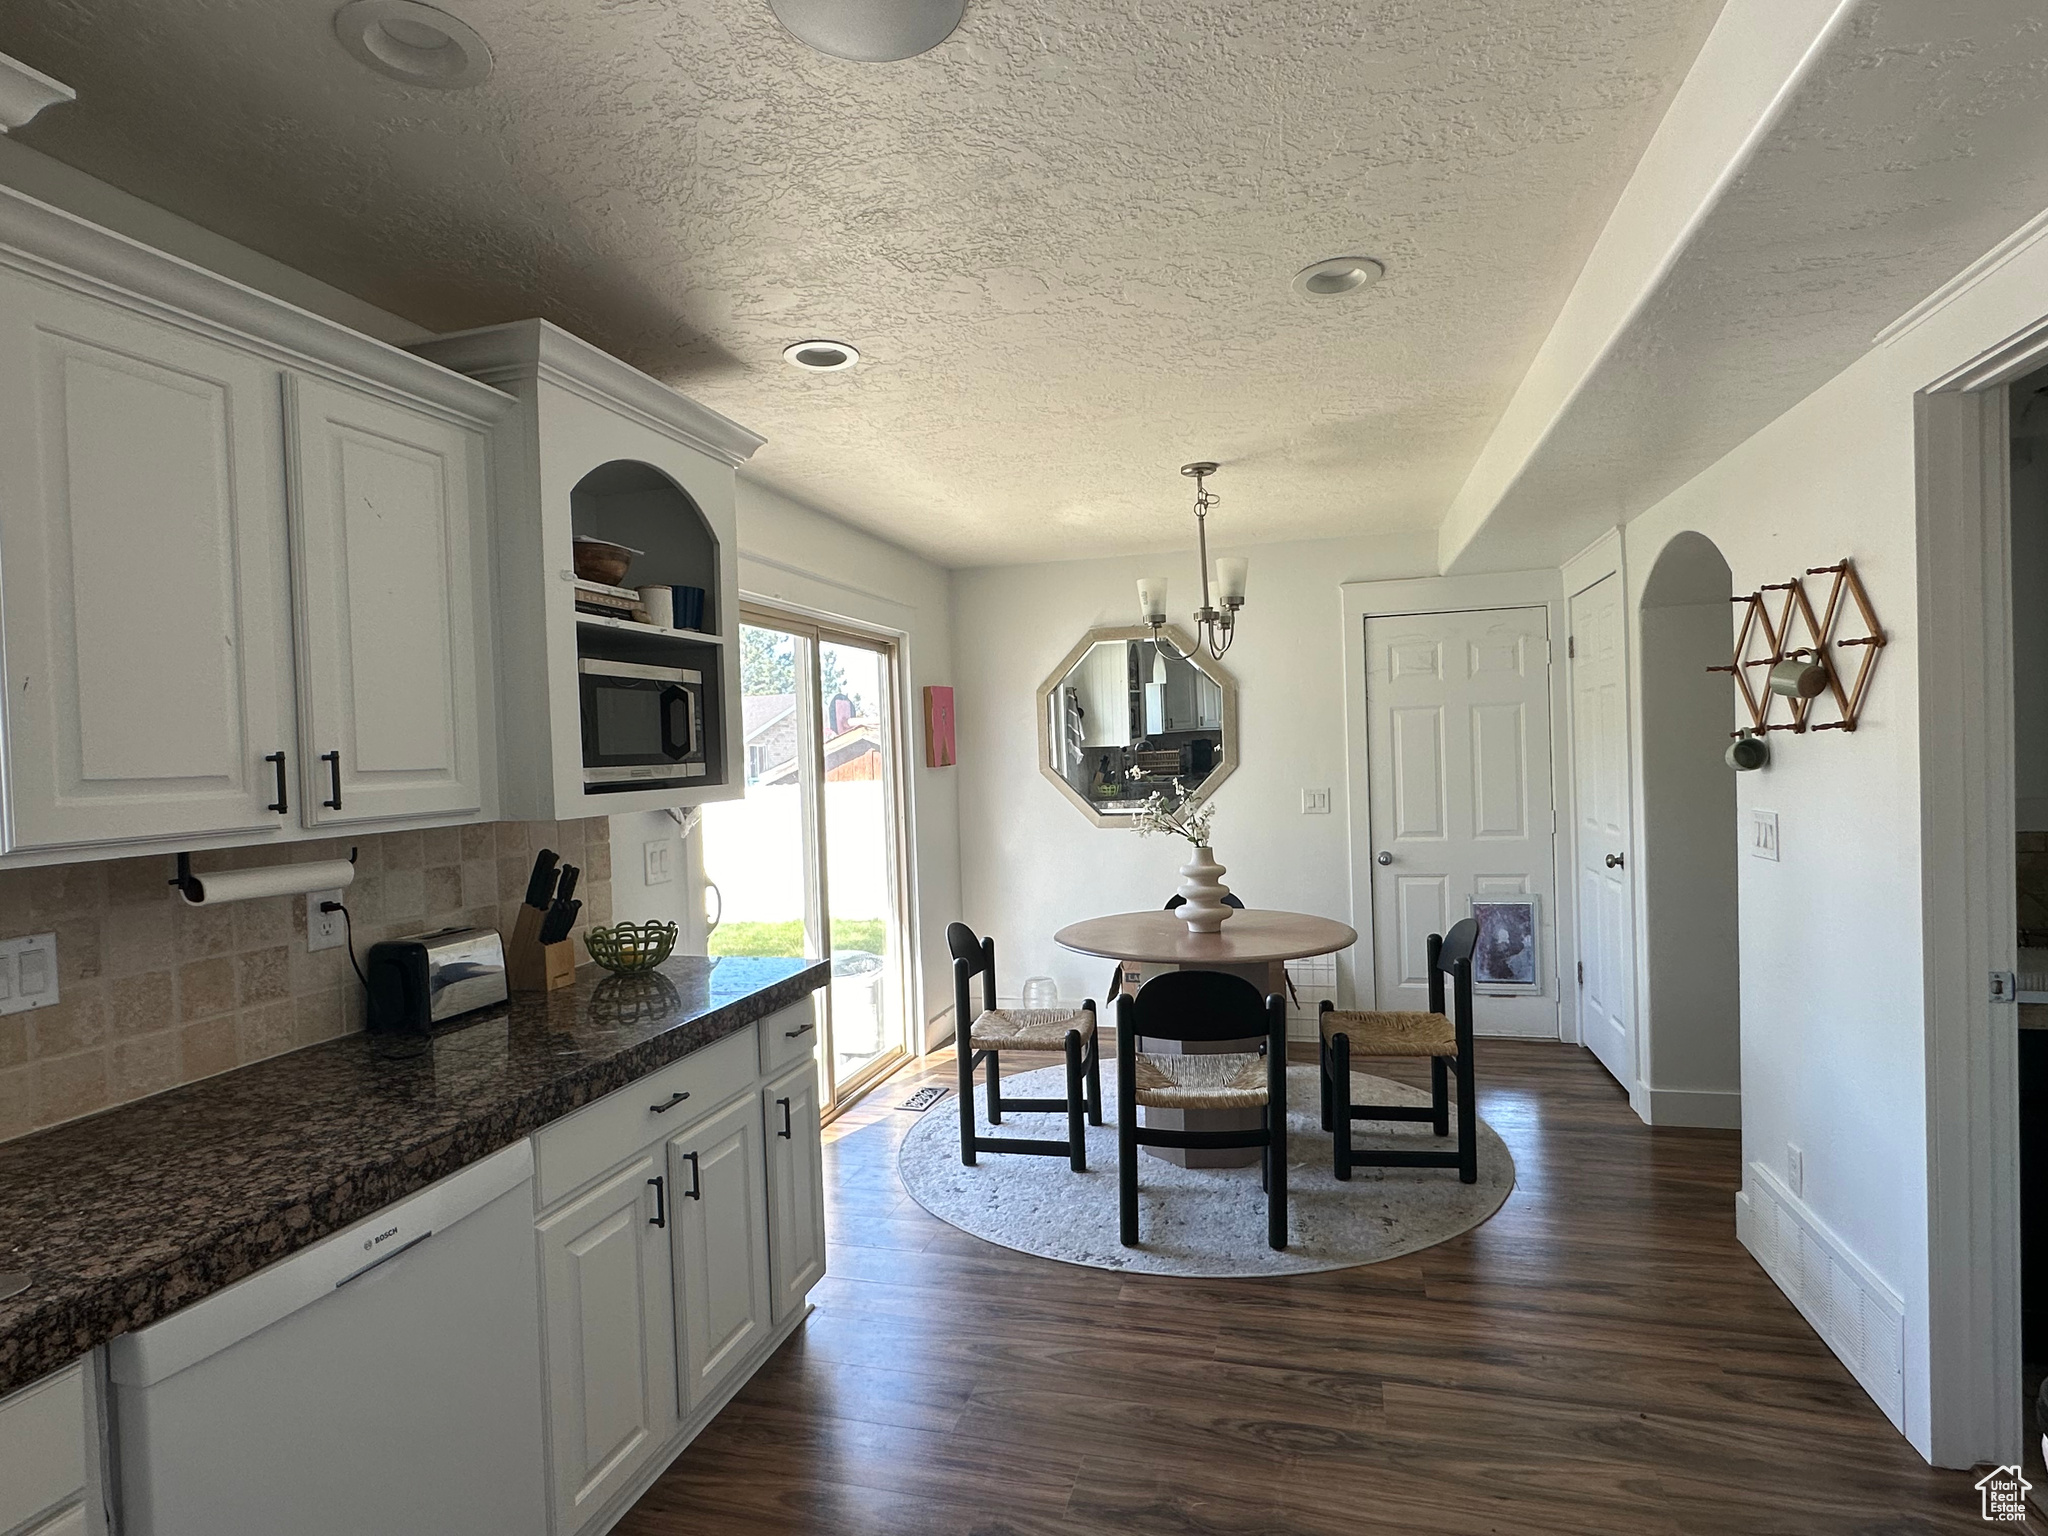 Kitchen with hanging light fixtures, dark wood-type flooring, white cabinetry, backsplash, and dishwasher